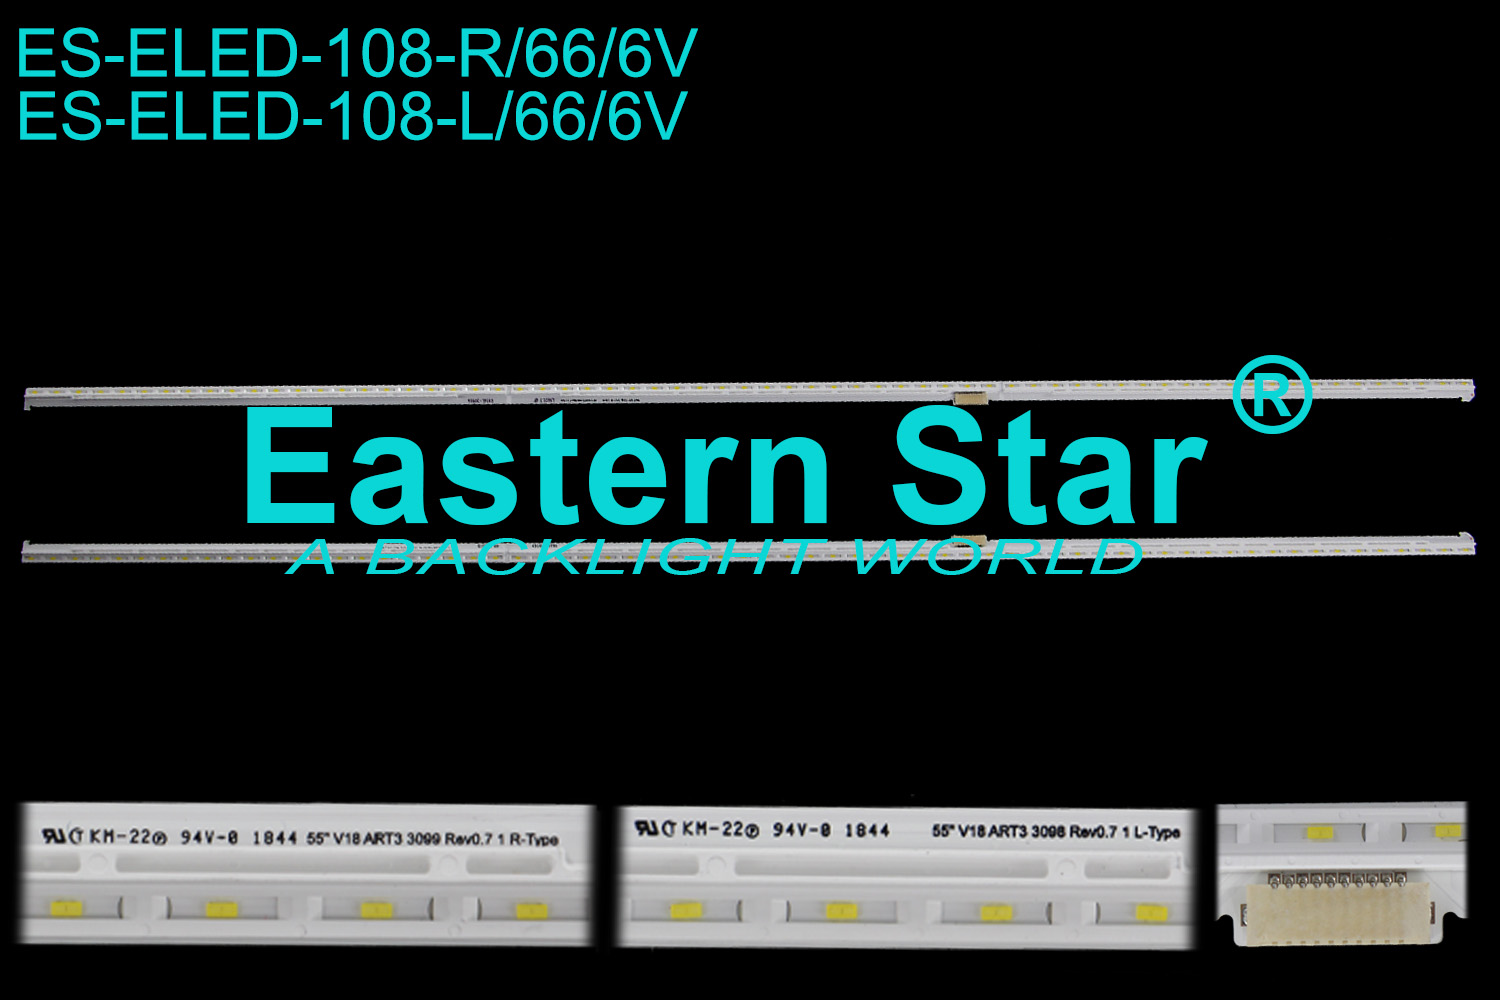 ES-ELED-108 ELED/EDGE TV backlight use for Lg 55'' 66LEDs  55"V18 ART3 3098 Rev0.7 L-Type LNU21J QF 6916L_3098A  55"V18 ART3 3098 Rev0.7 R-Type Q1U21J QH 6916L_3099A (/)